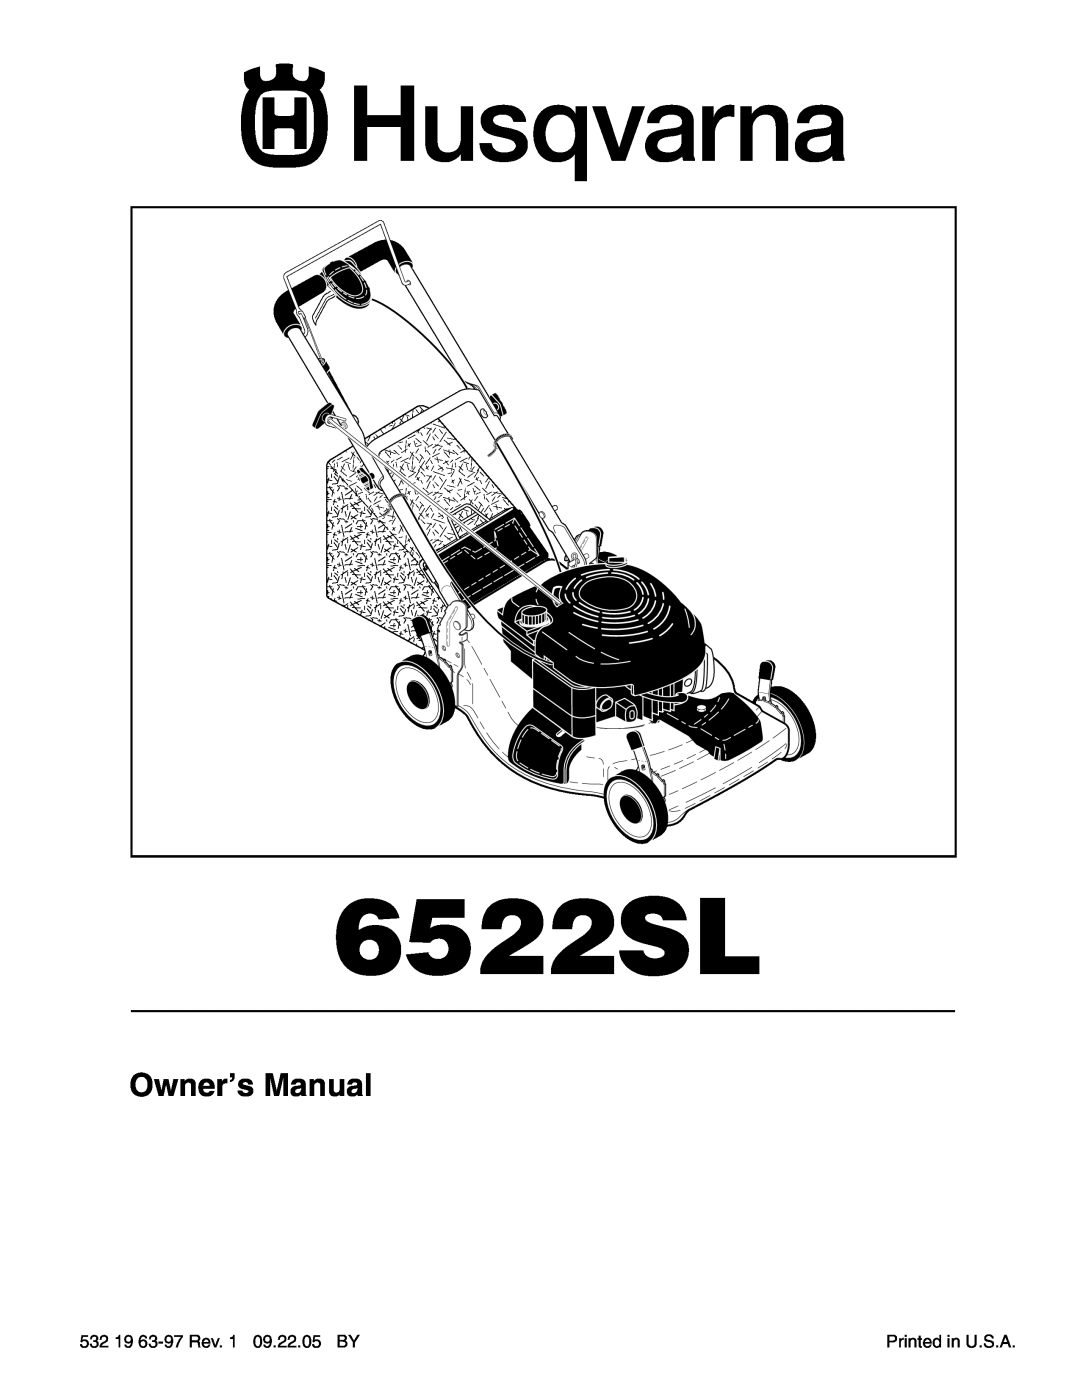 Husqvarna 6522SL owner manual Owner’s Manual 